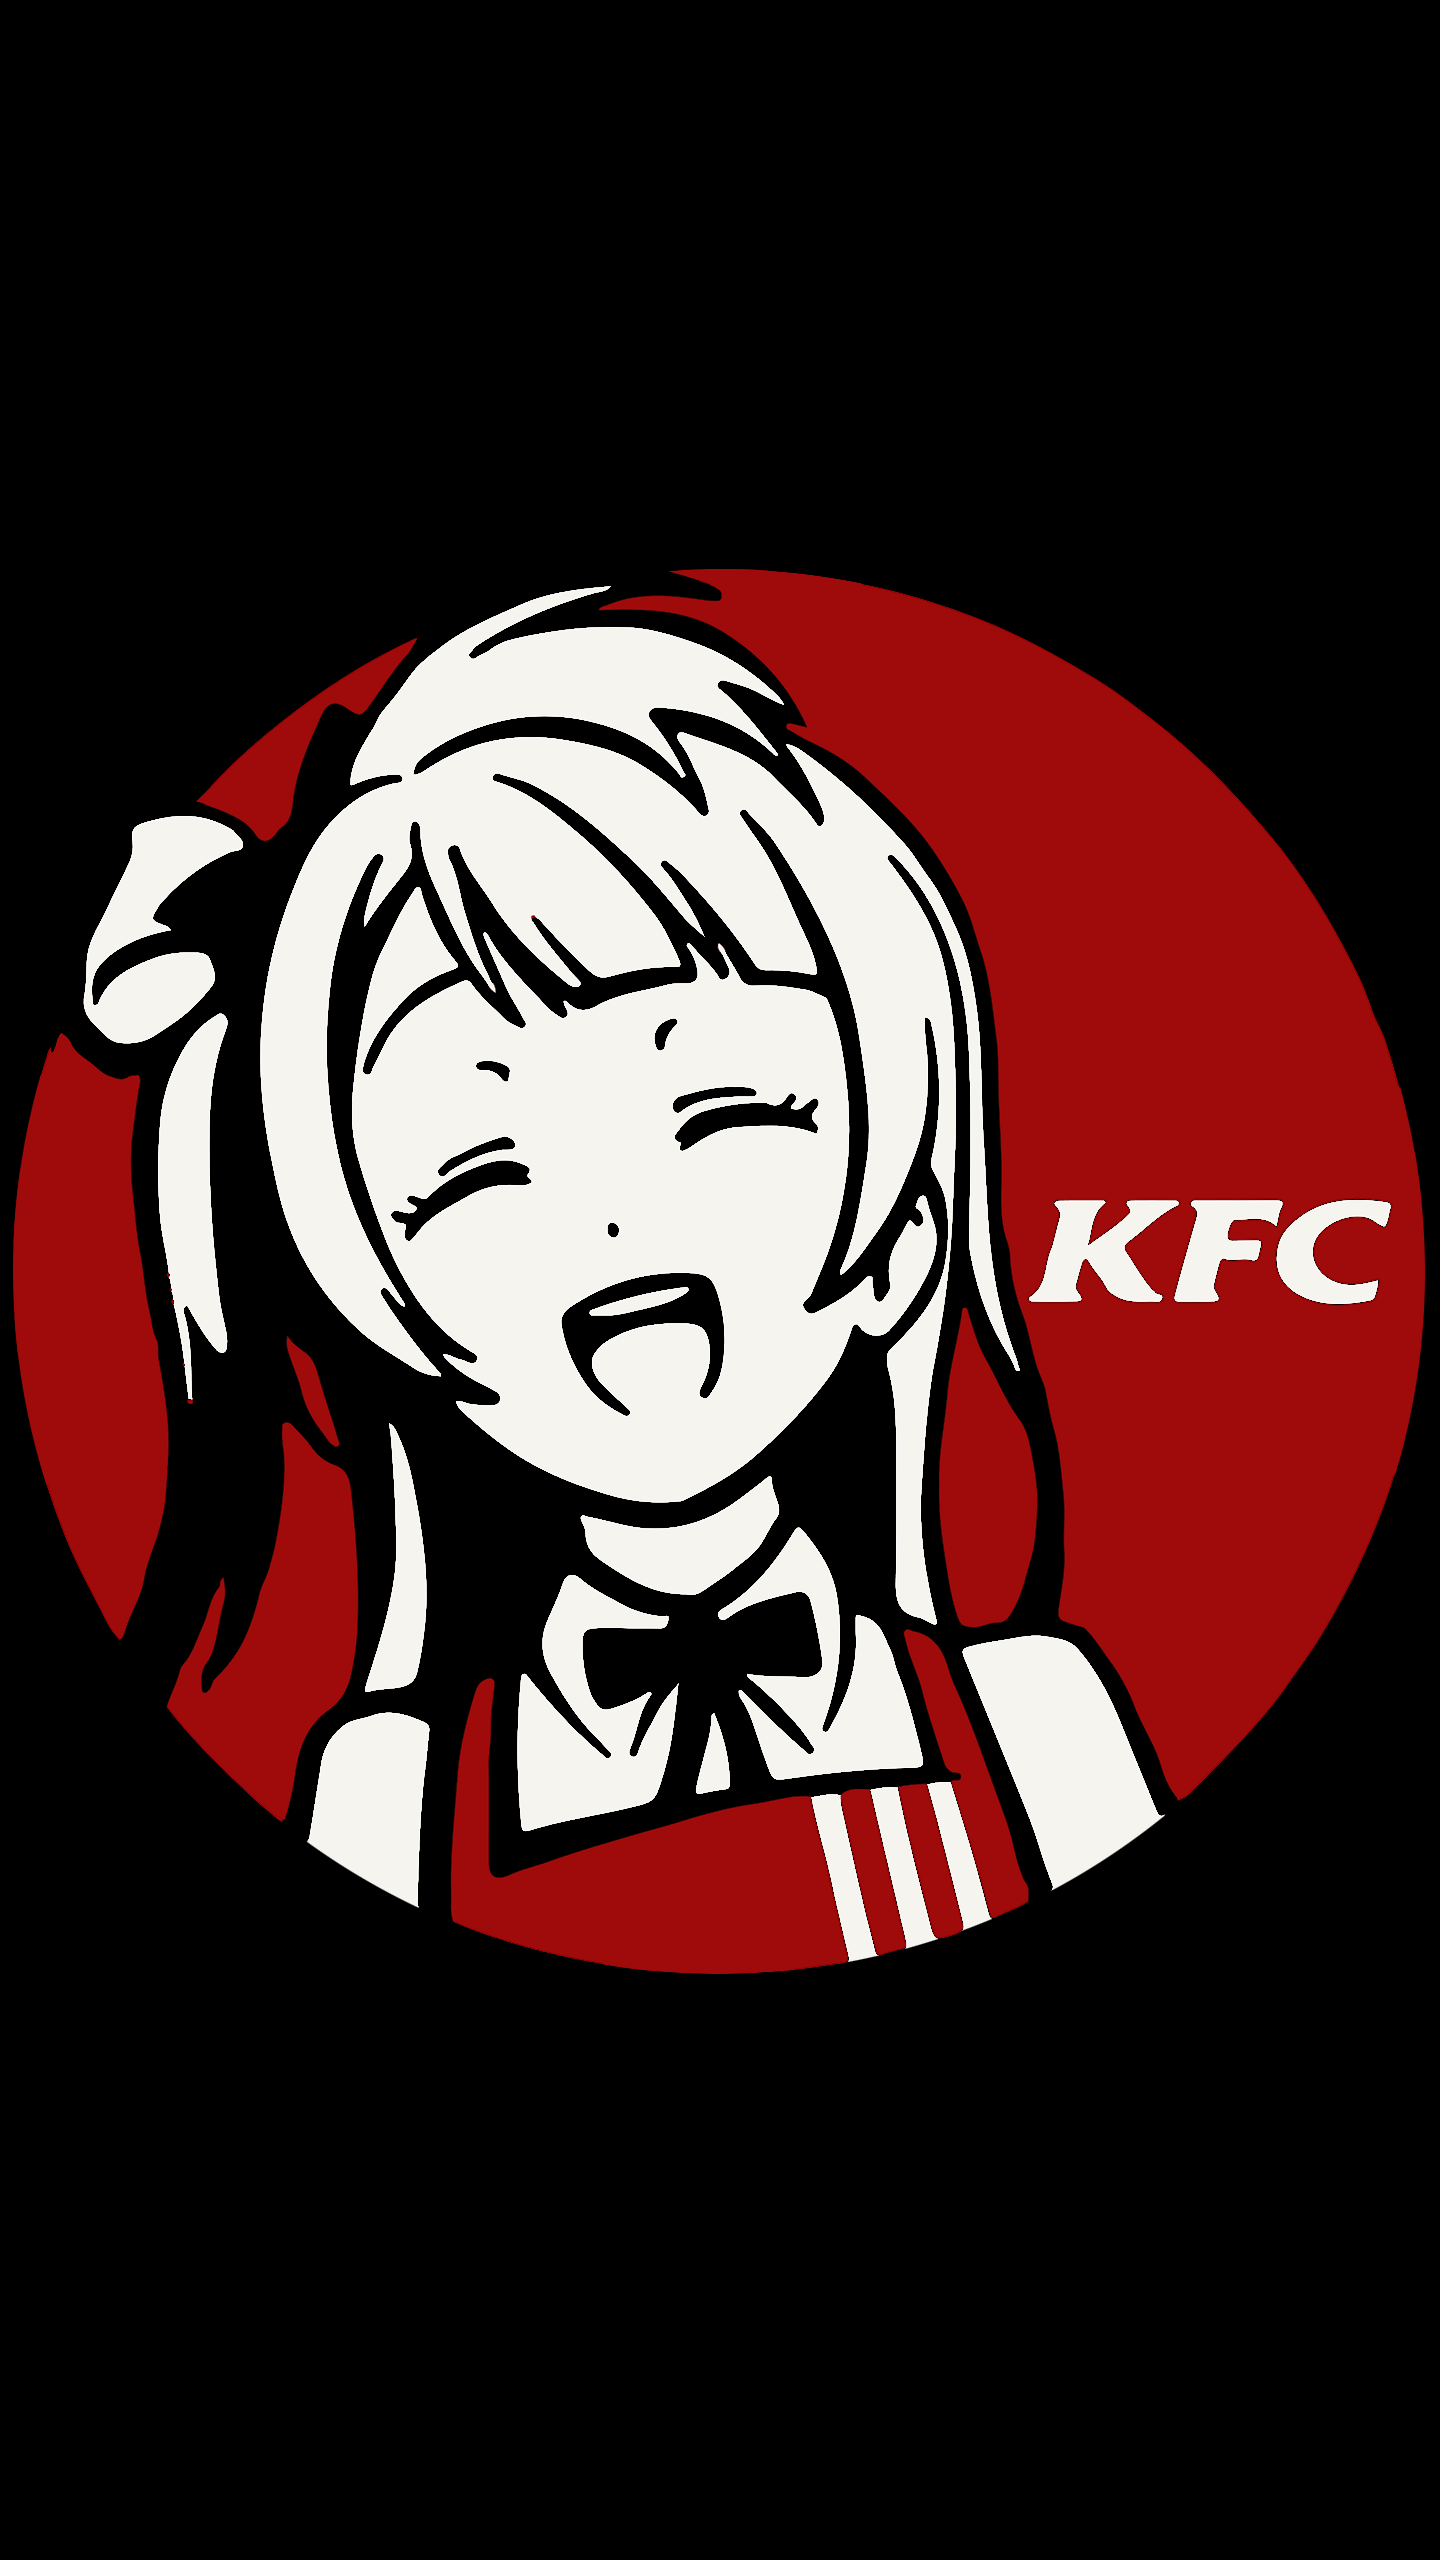 Anime KFC Logo Wallpaper Request uncompressed image